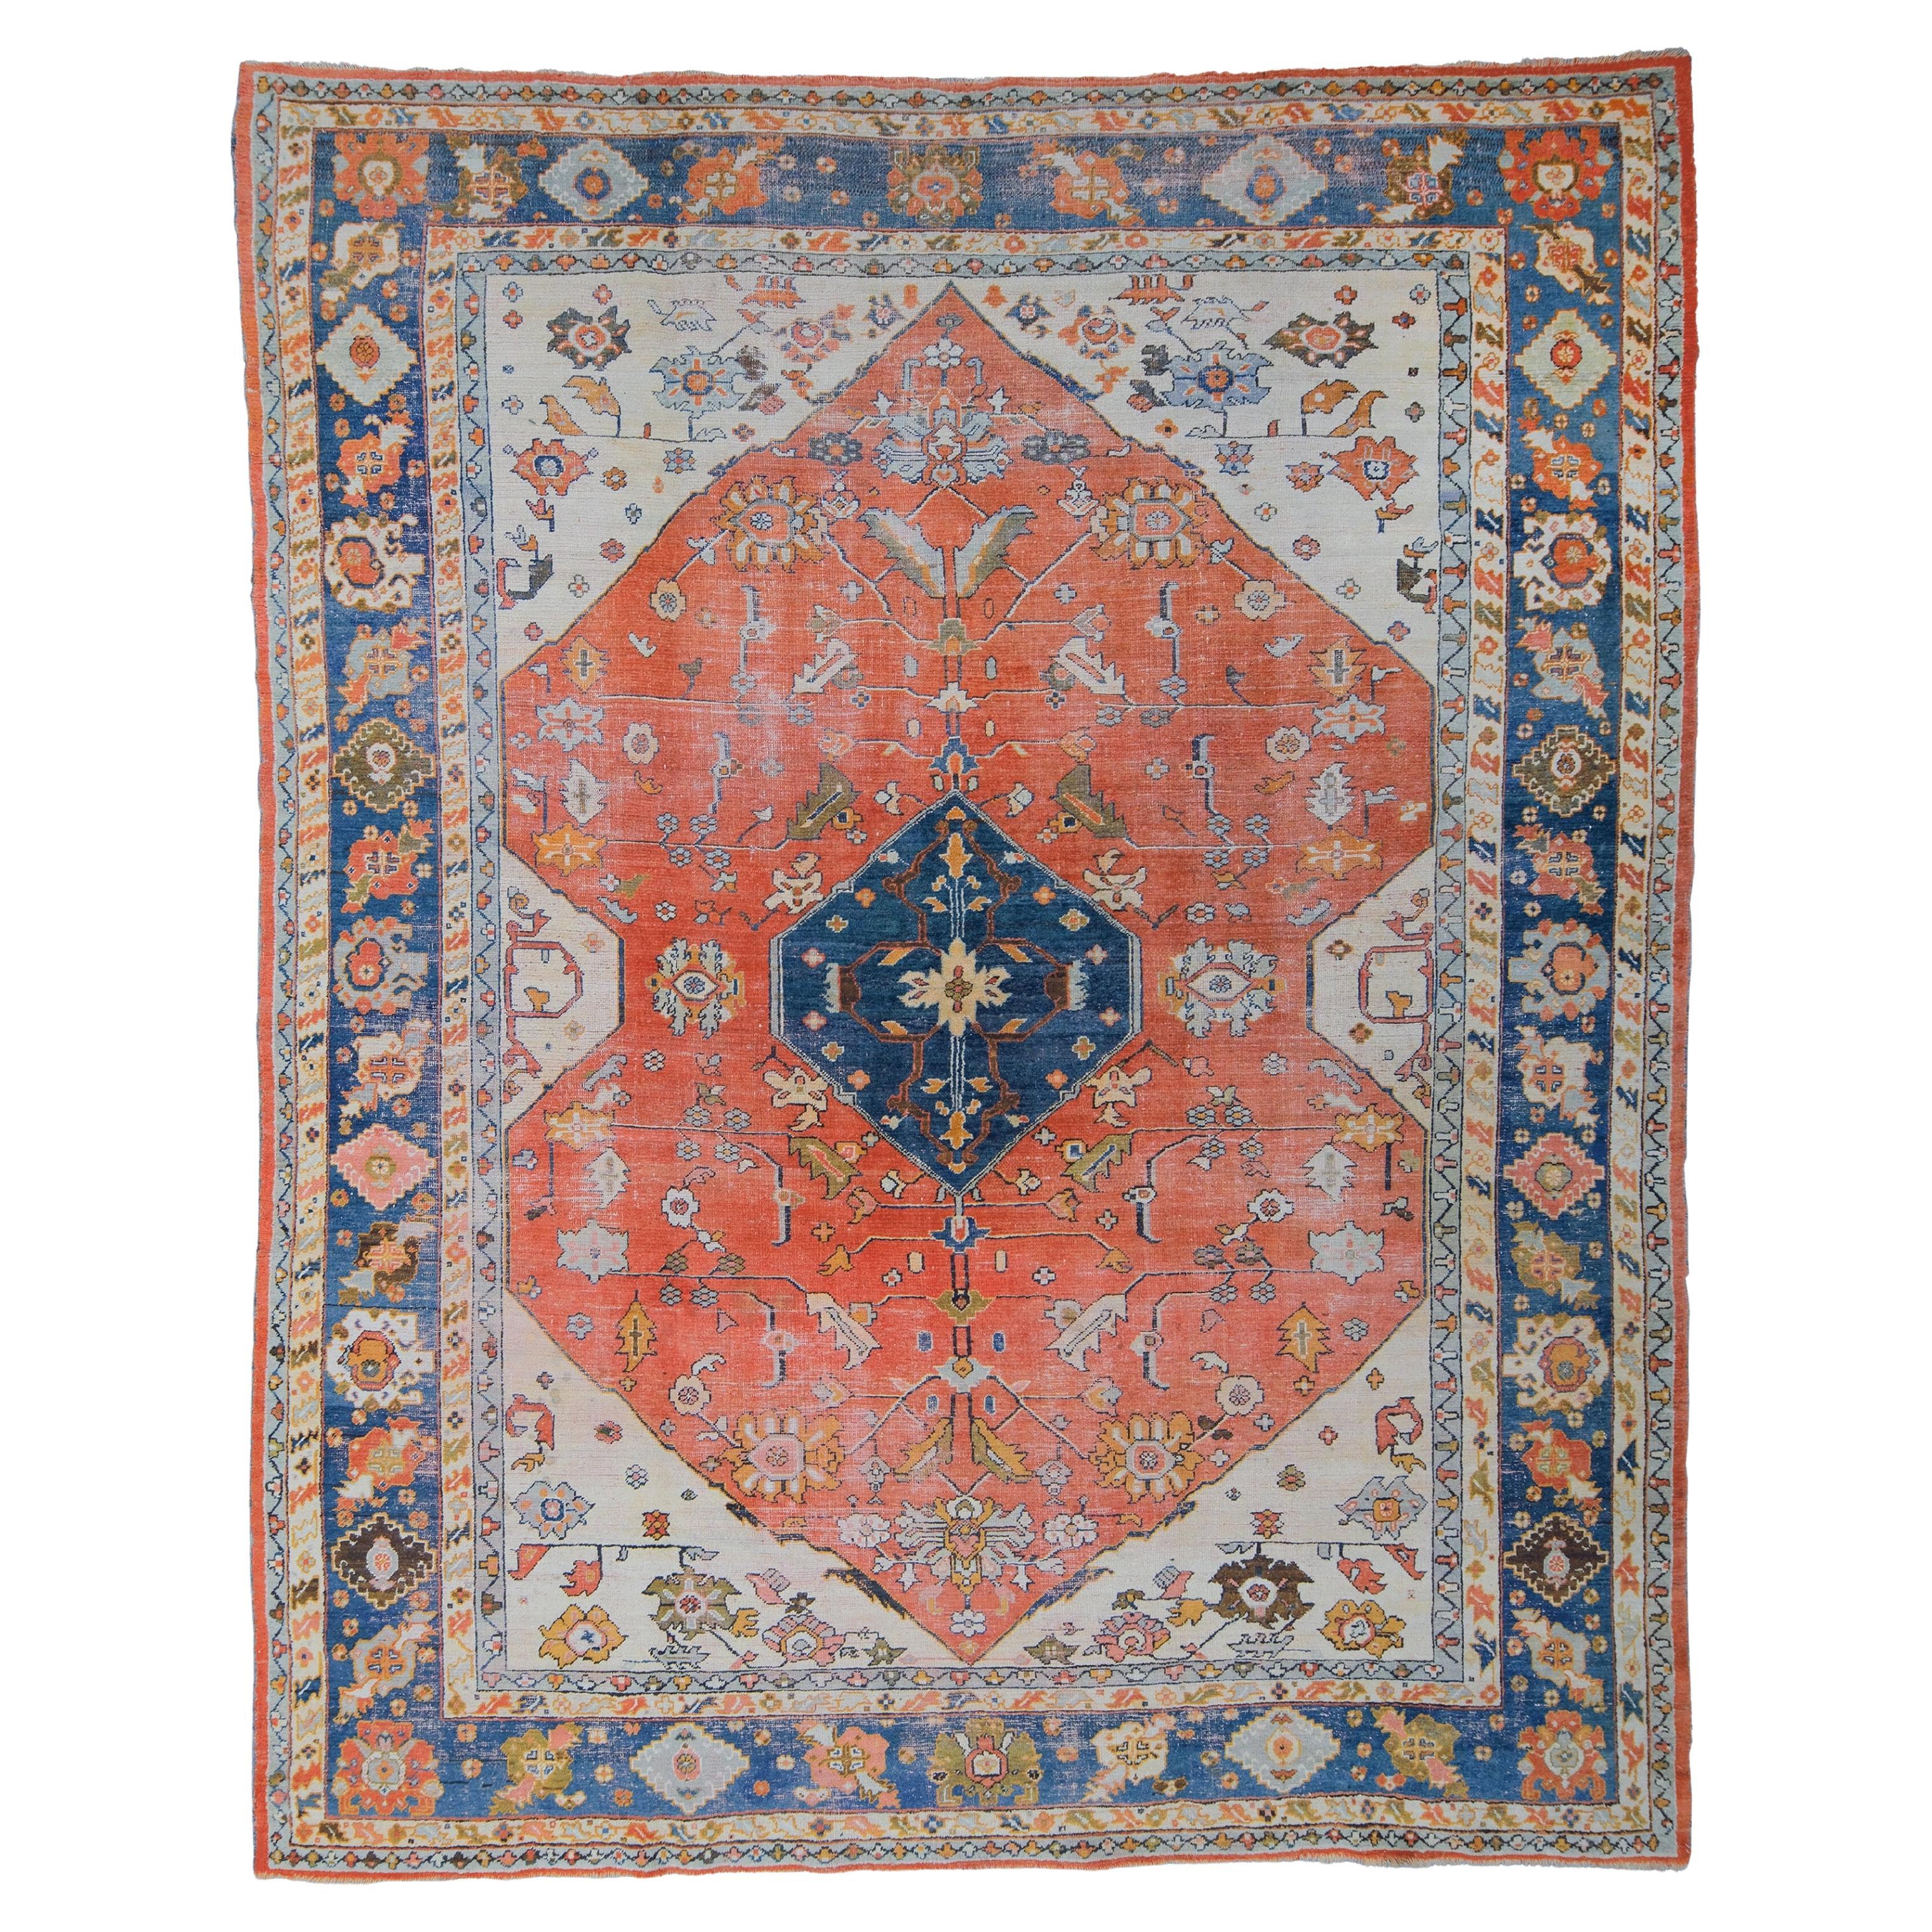 Antique Ushak Carpet - Late 19th Century Turkish Ushak Carpet, Antique Carpet For Sale